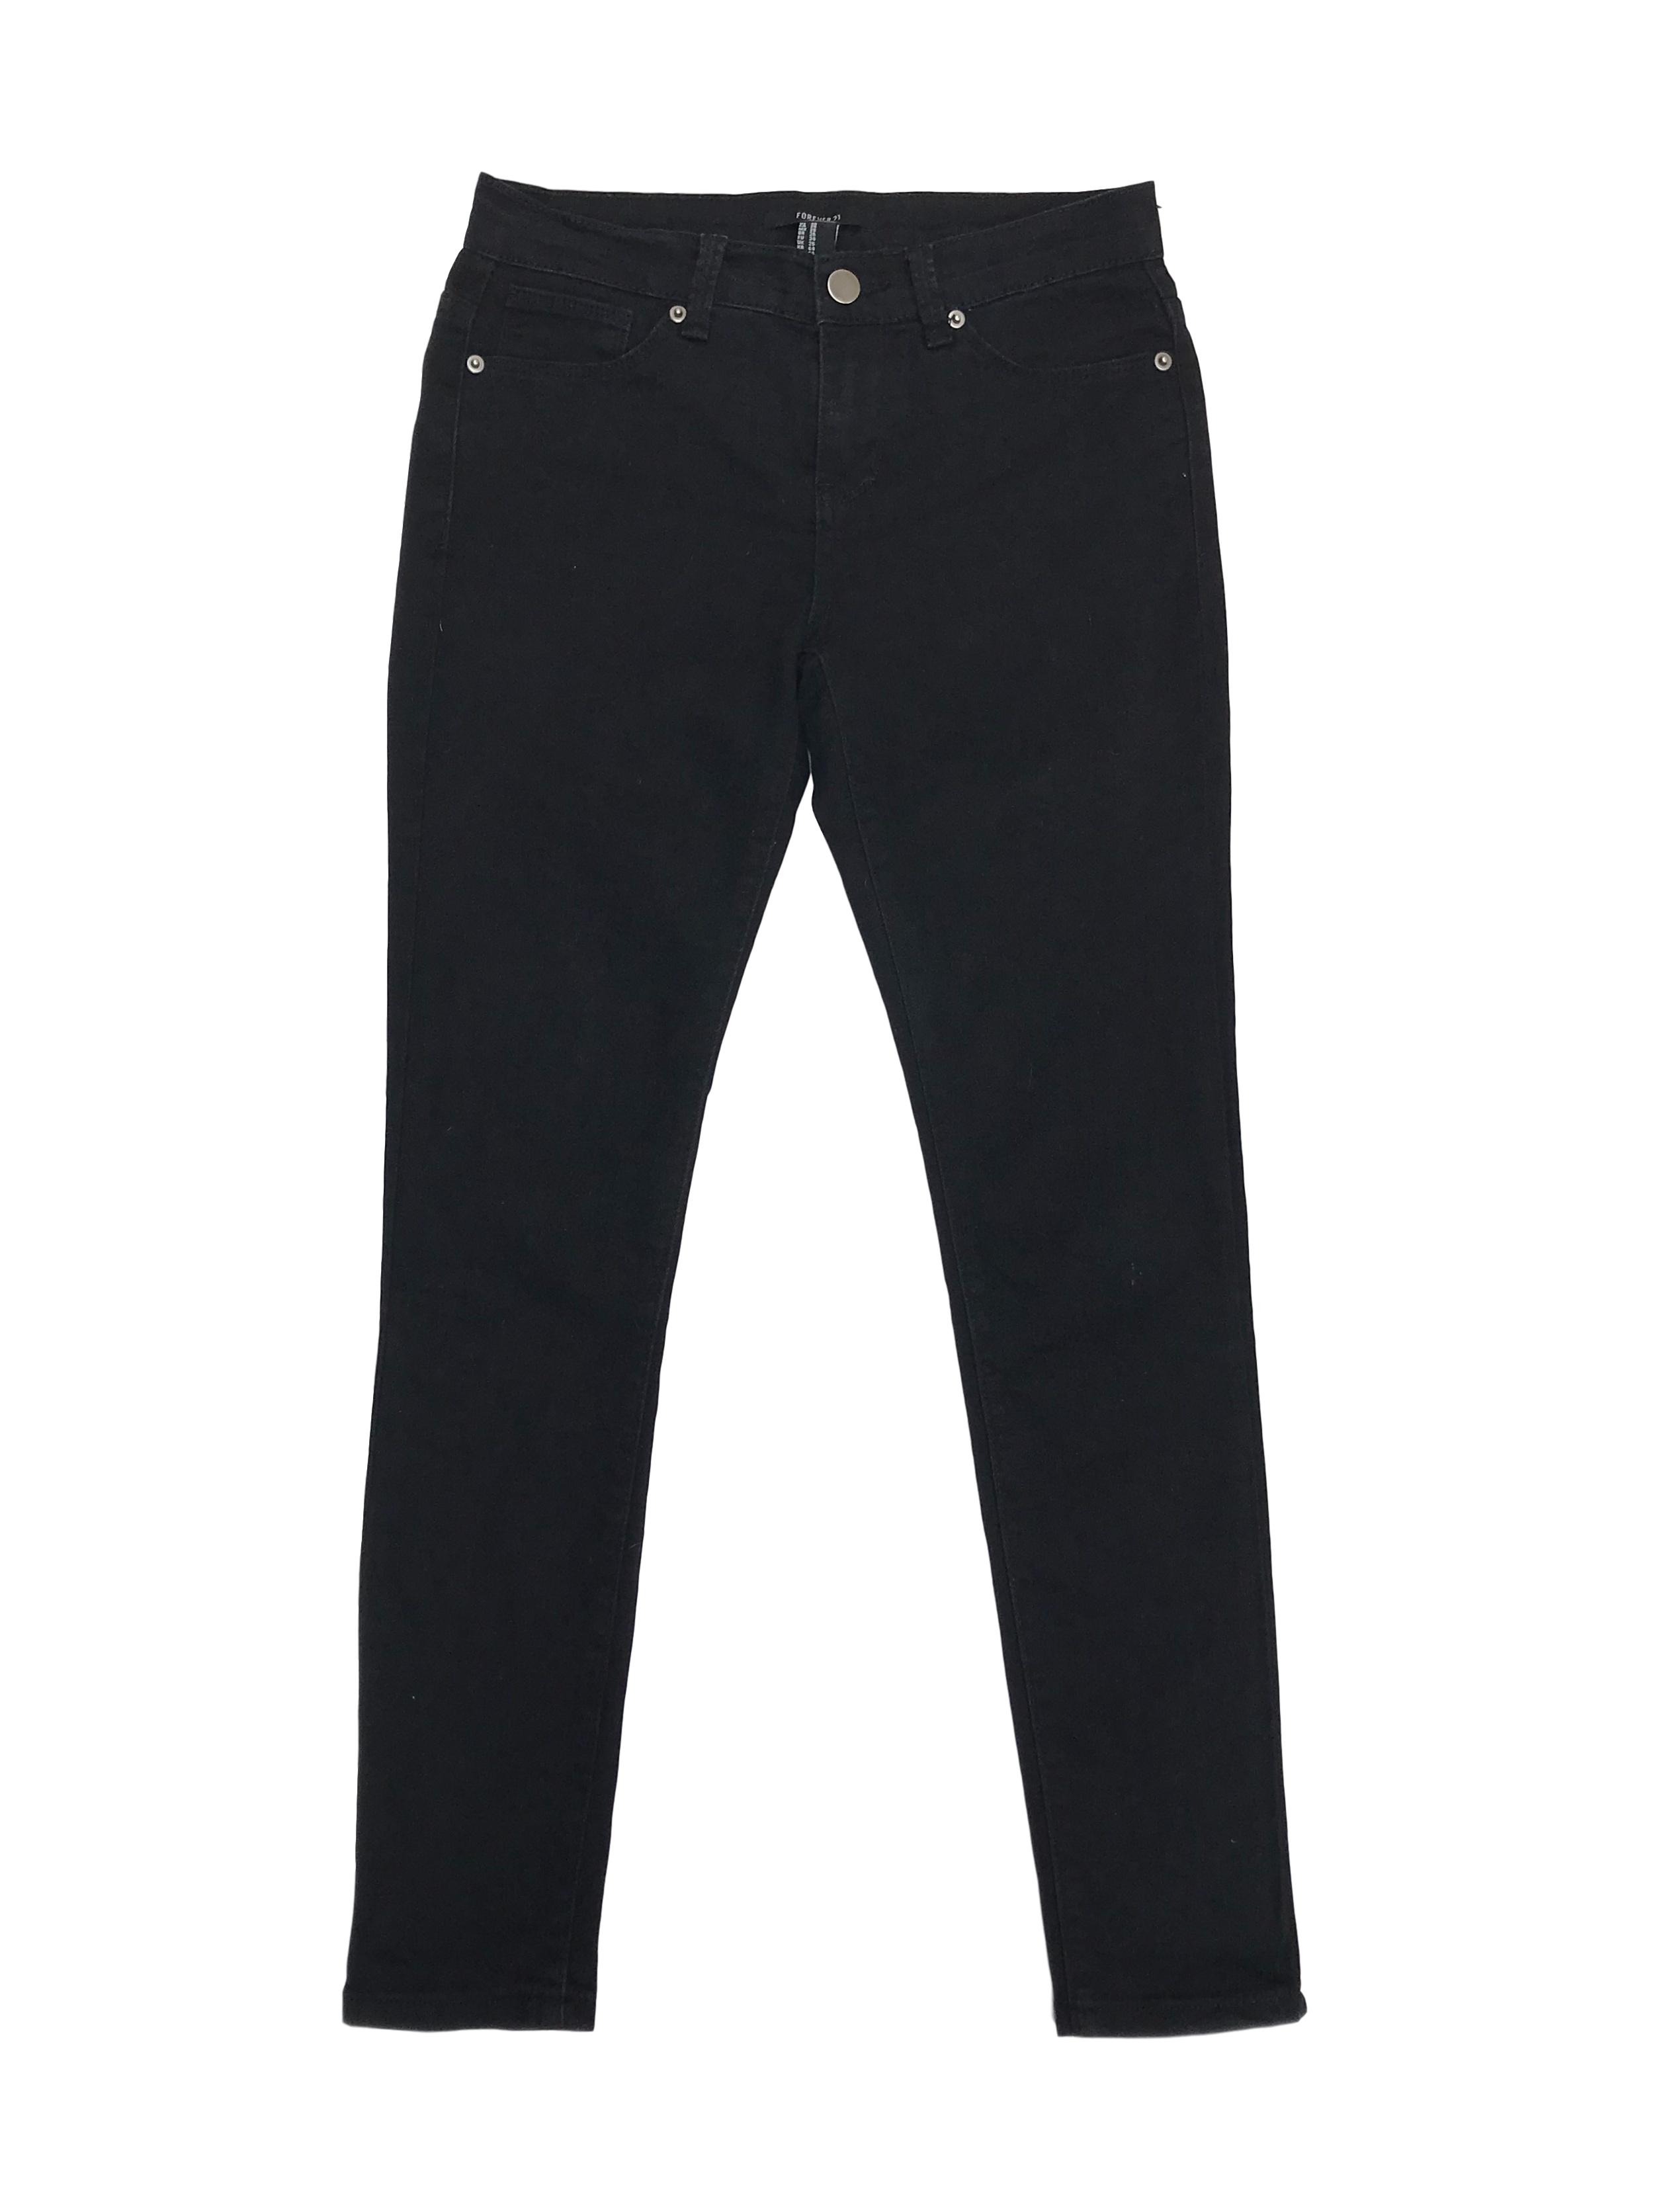 Pantalón jean pitillo Forever21 negro 61% algodón ligeramente stretch. Pretina 70cm